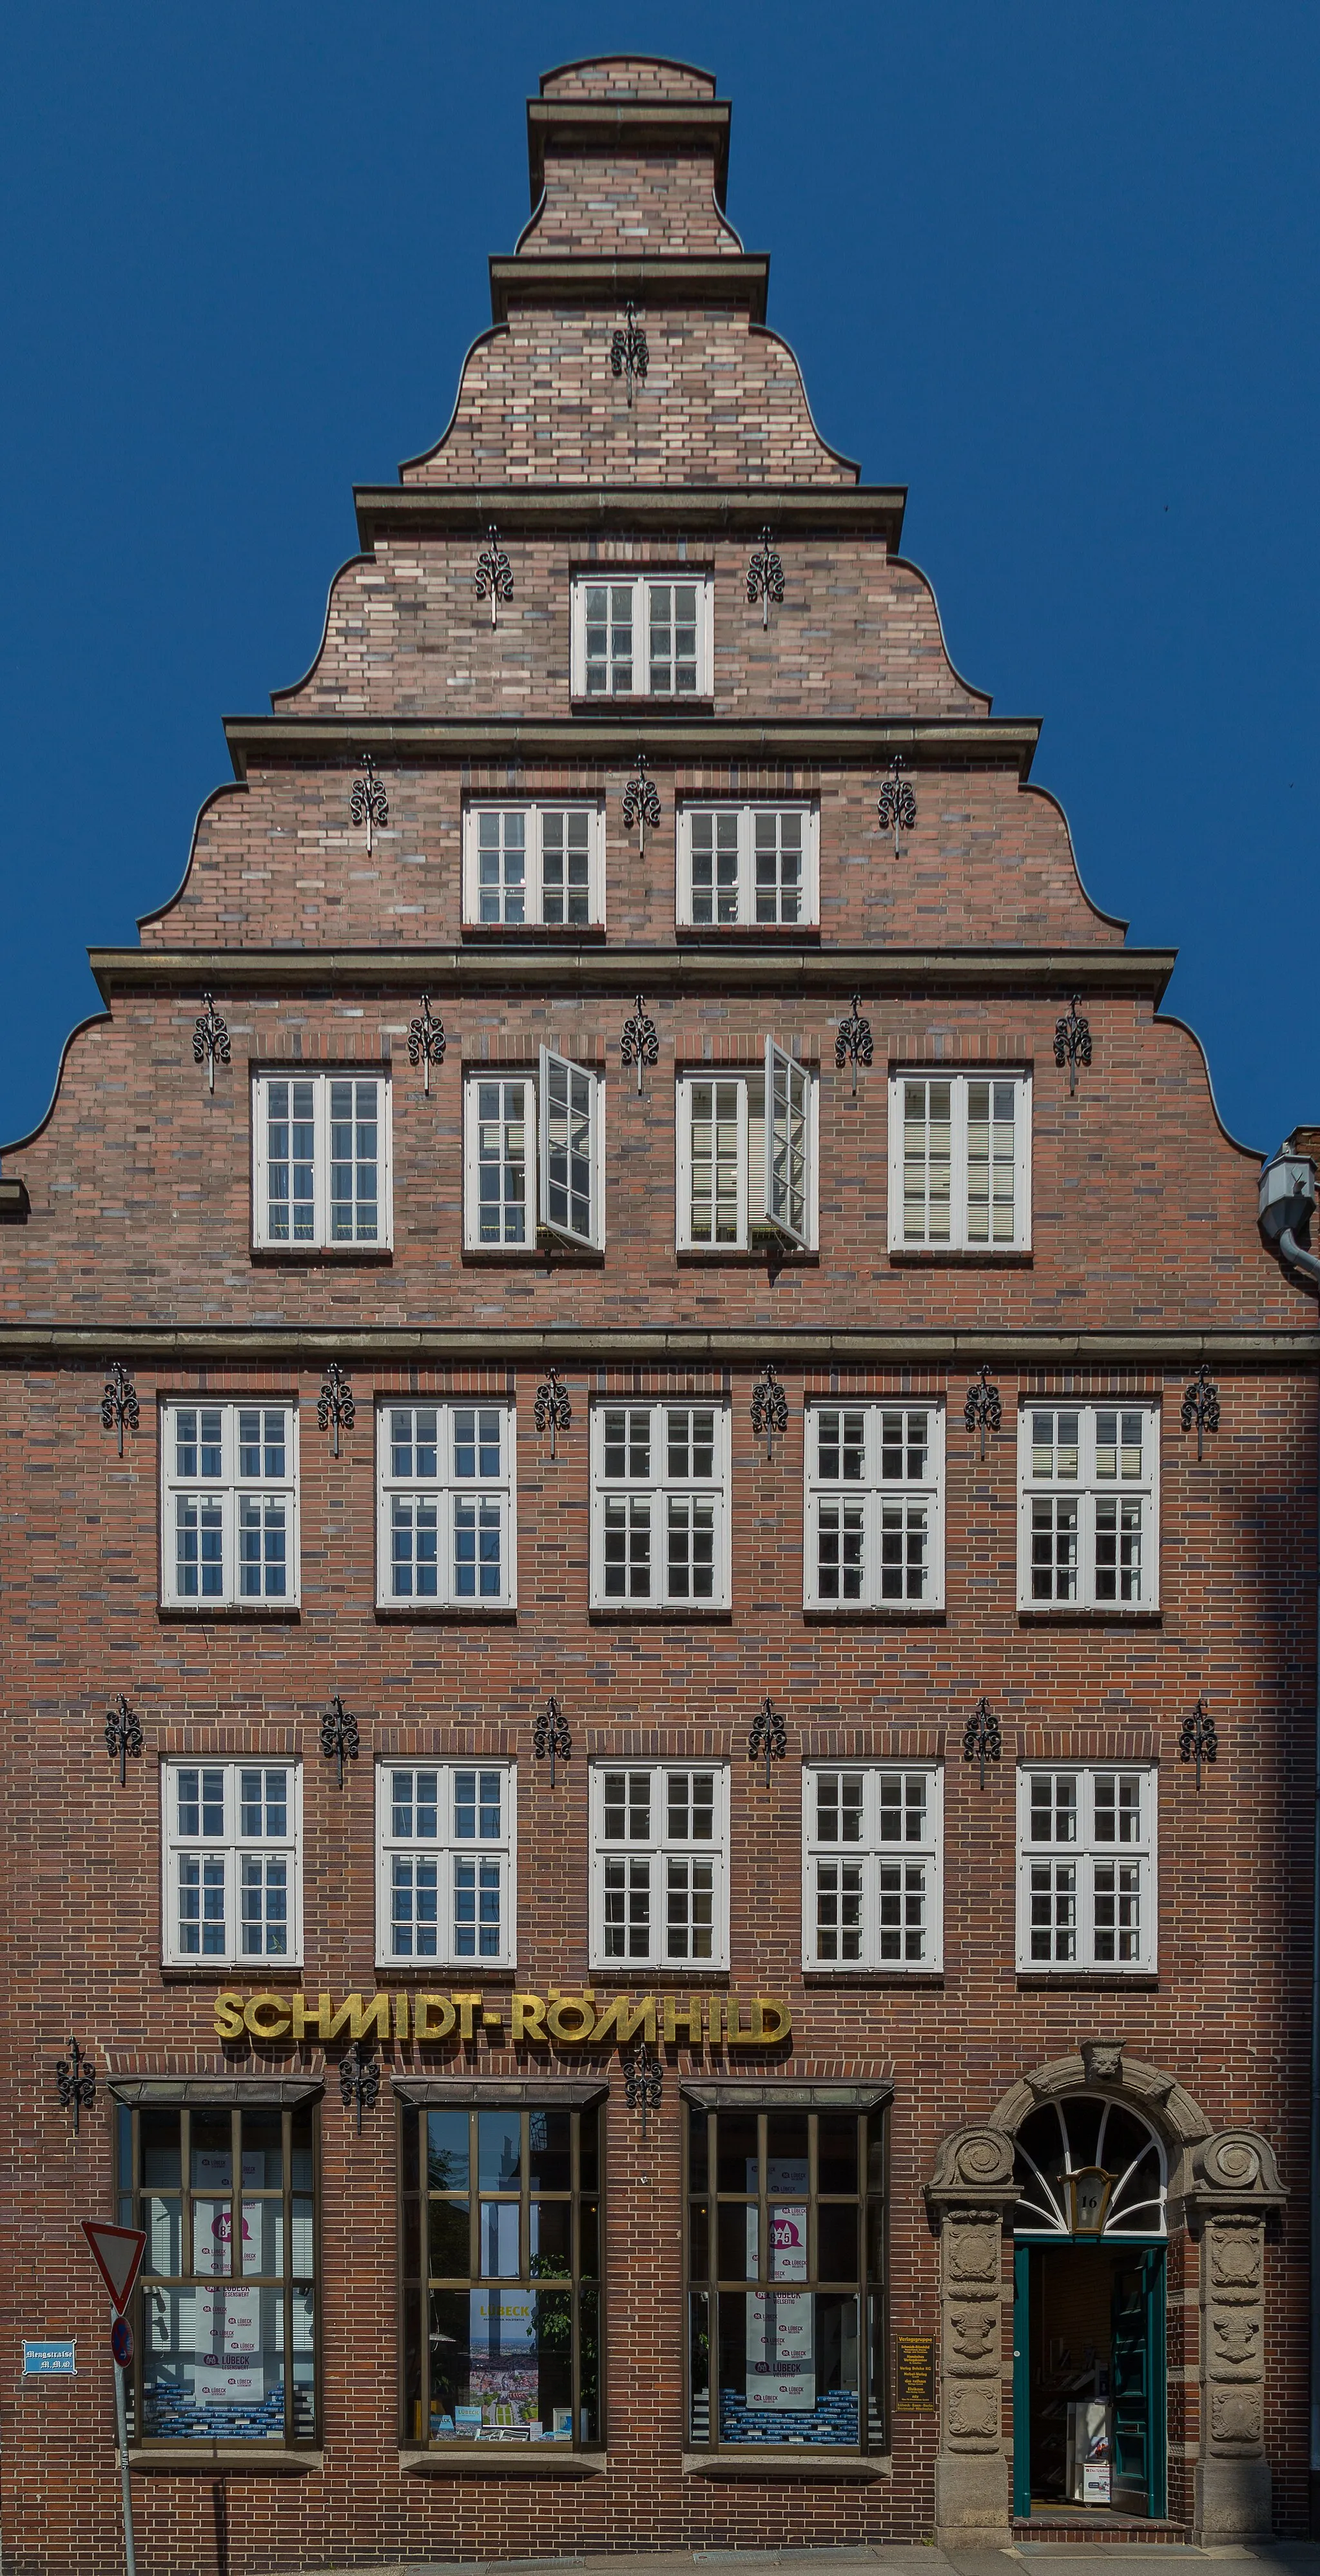 Photo showing: The Schmidt-Römhild publishing building, 16 Meng Street (Mengstraße 16) in the Hanseatic City of Lübeck (Lübeck-Altstadt), Lübeck, Schleswig-Holstein, Germany.